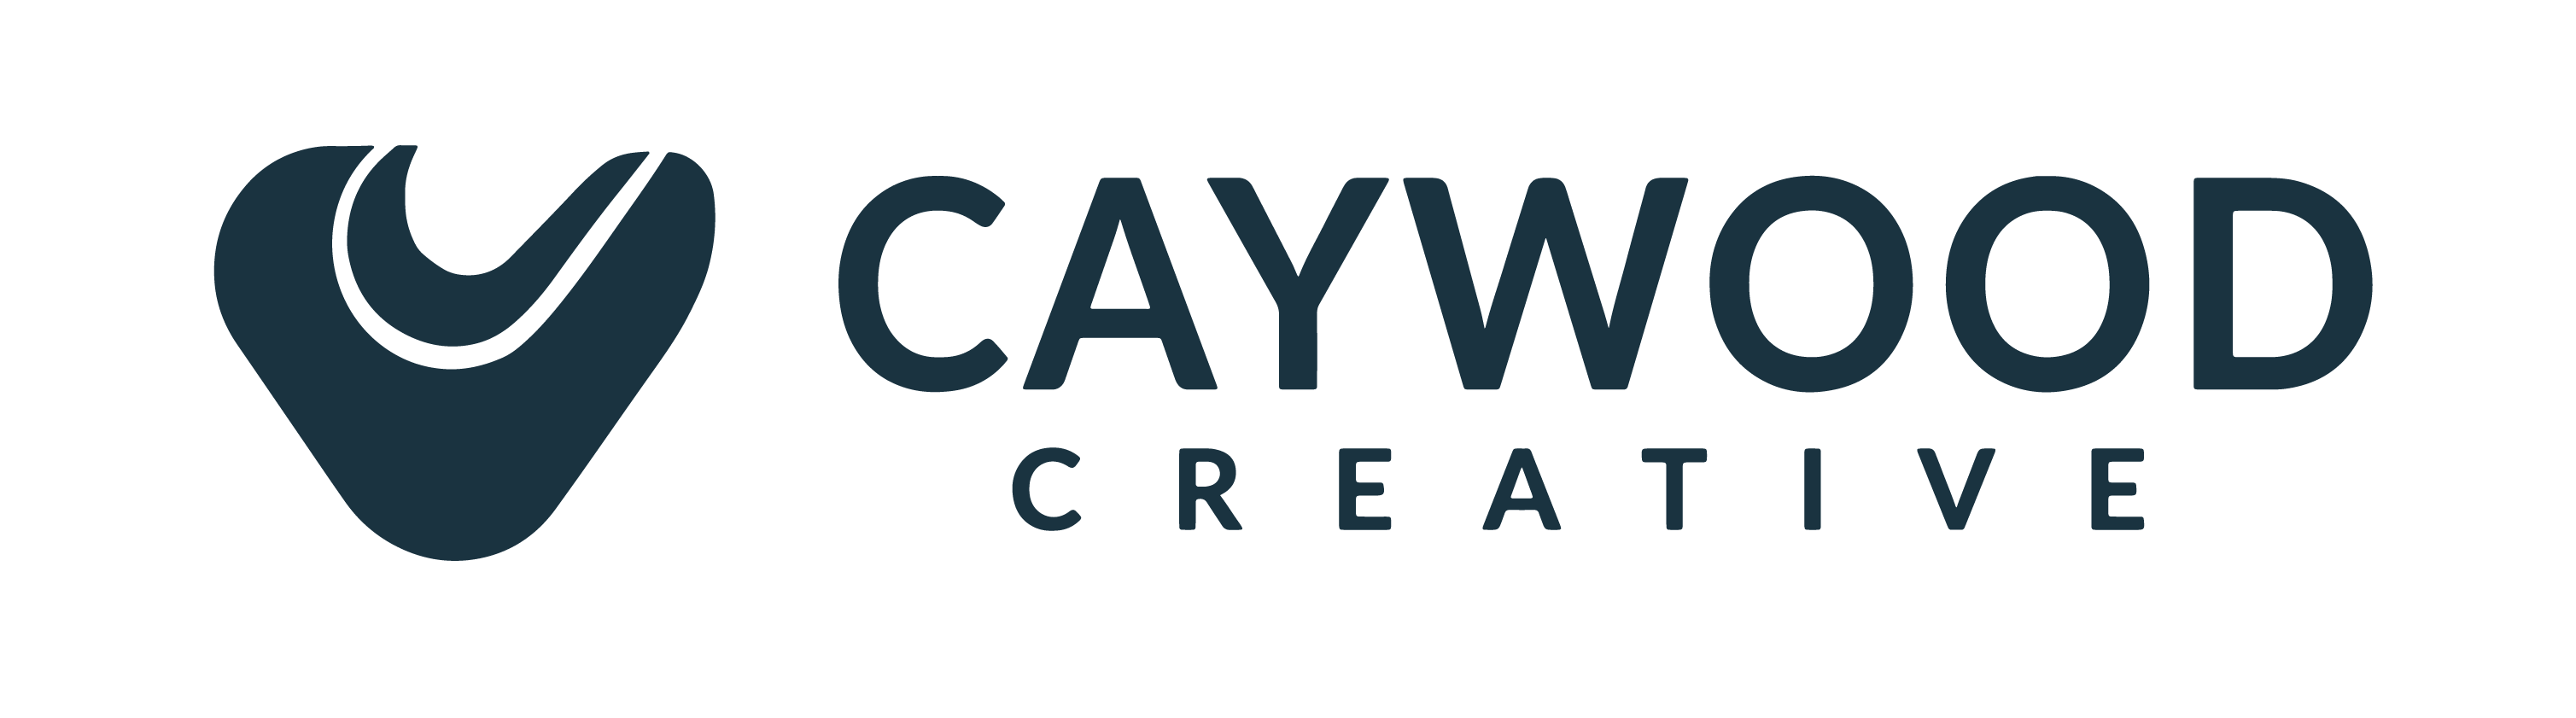 Caywood Creative